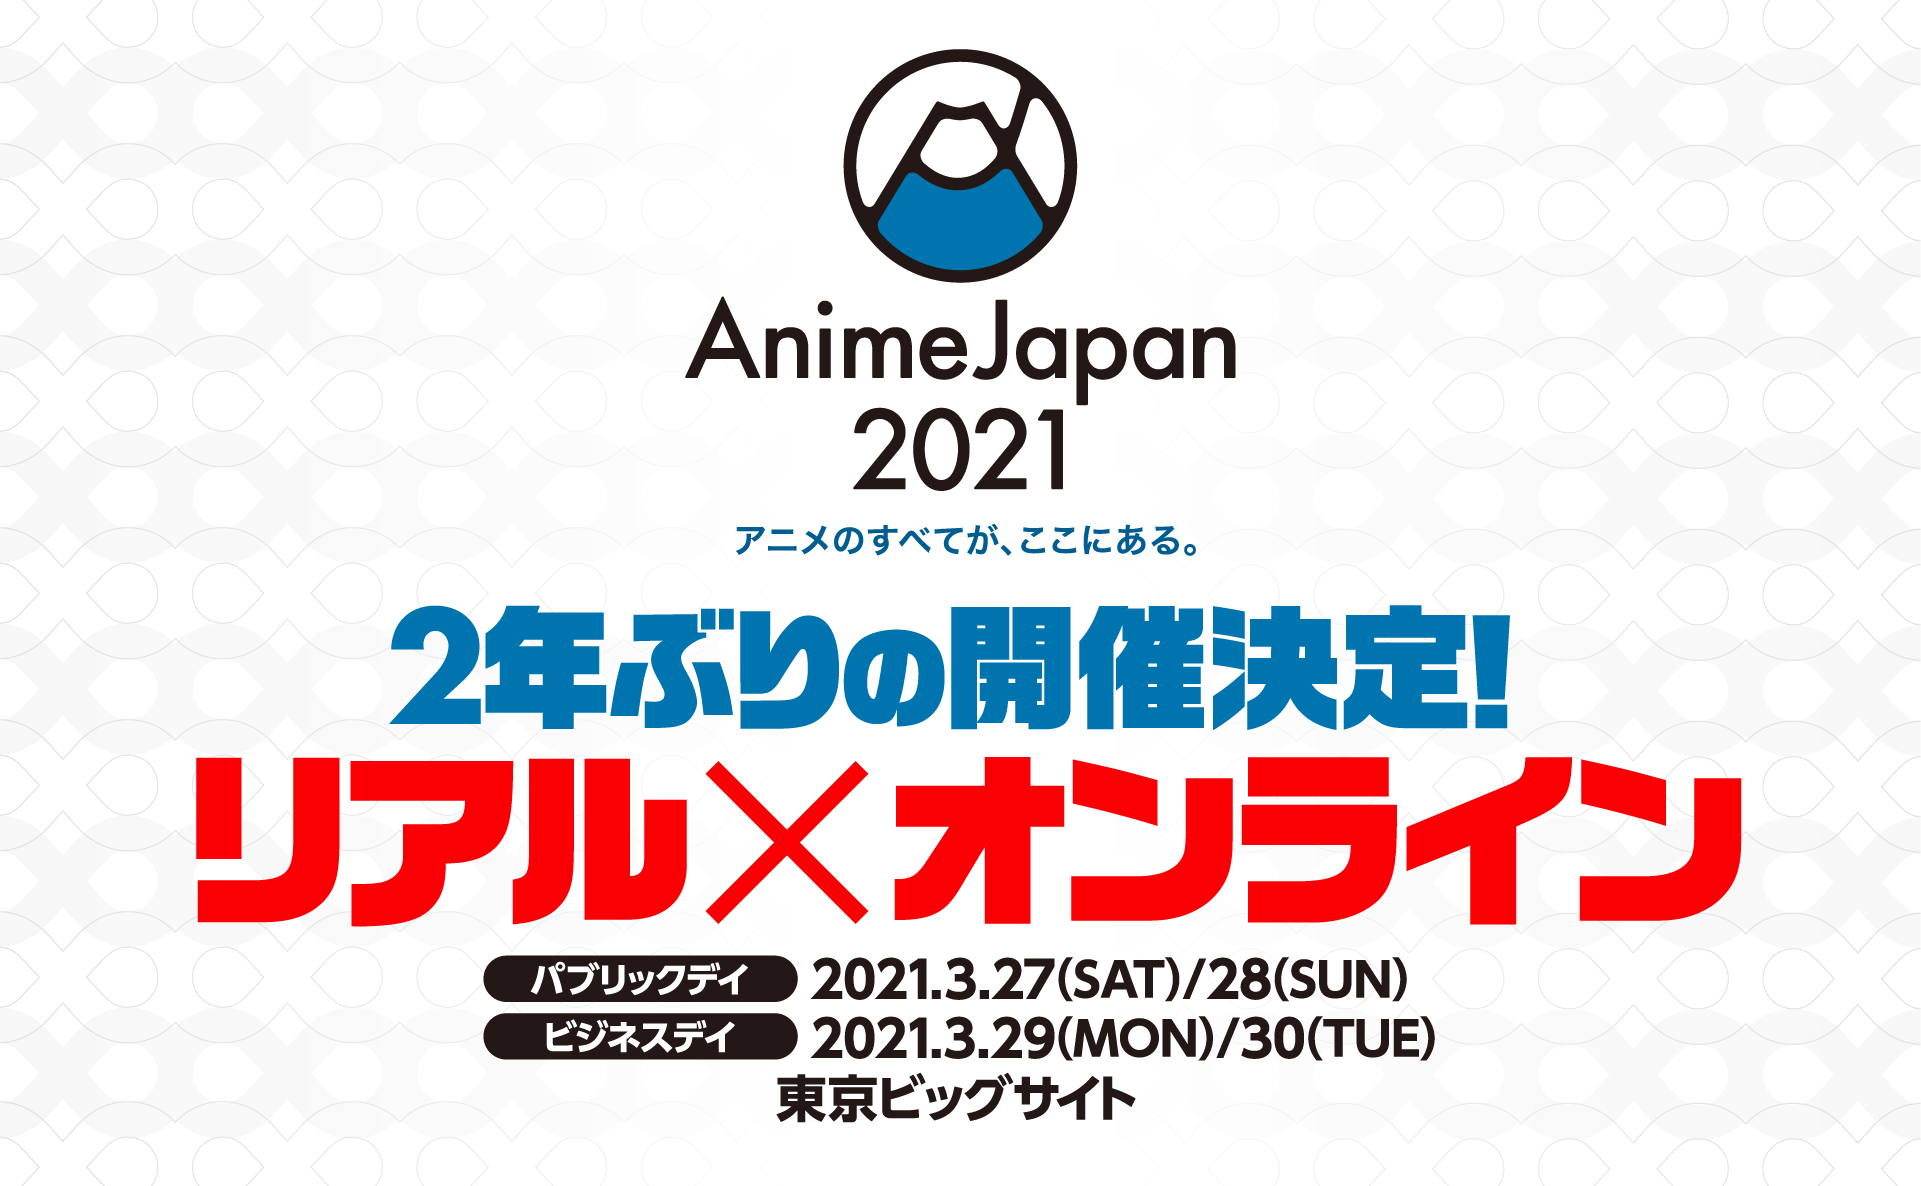 AnimeJapan 2021